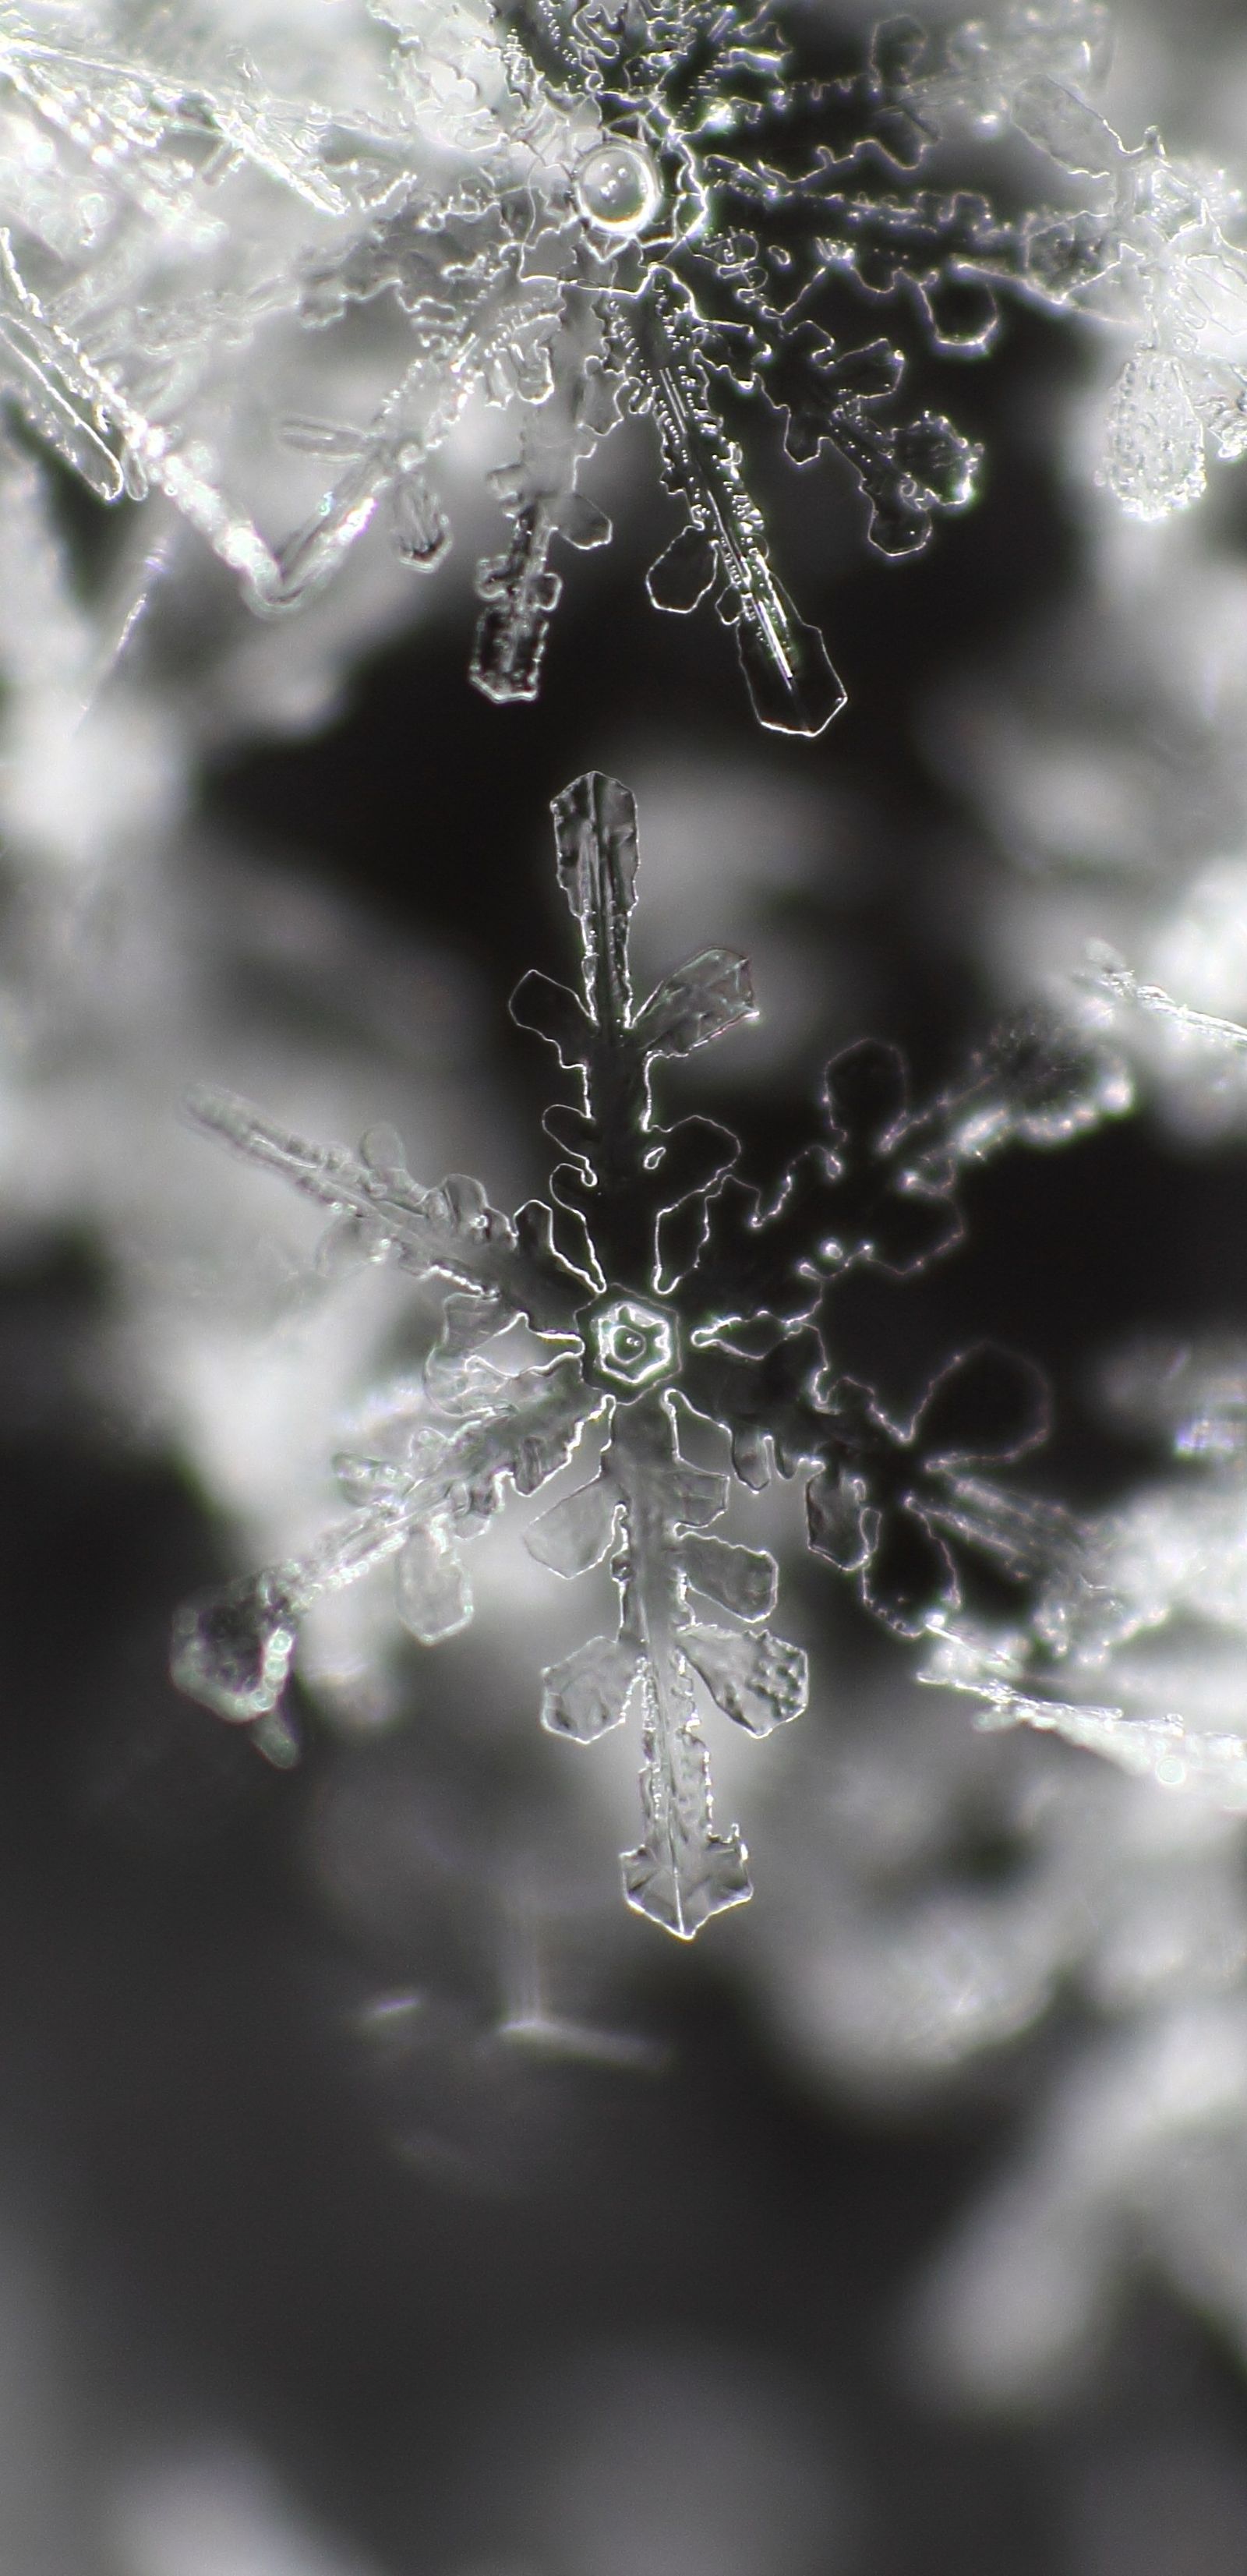 A snowflake under a microscope. - Snowflake